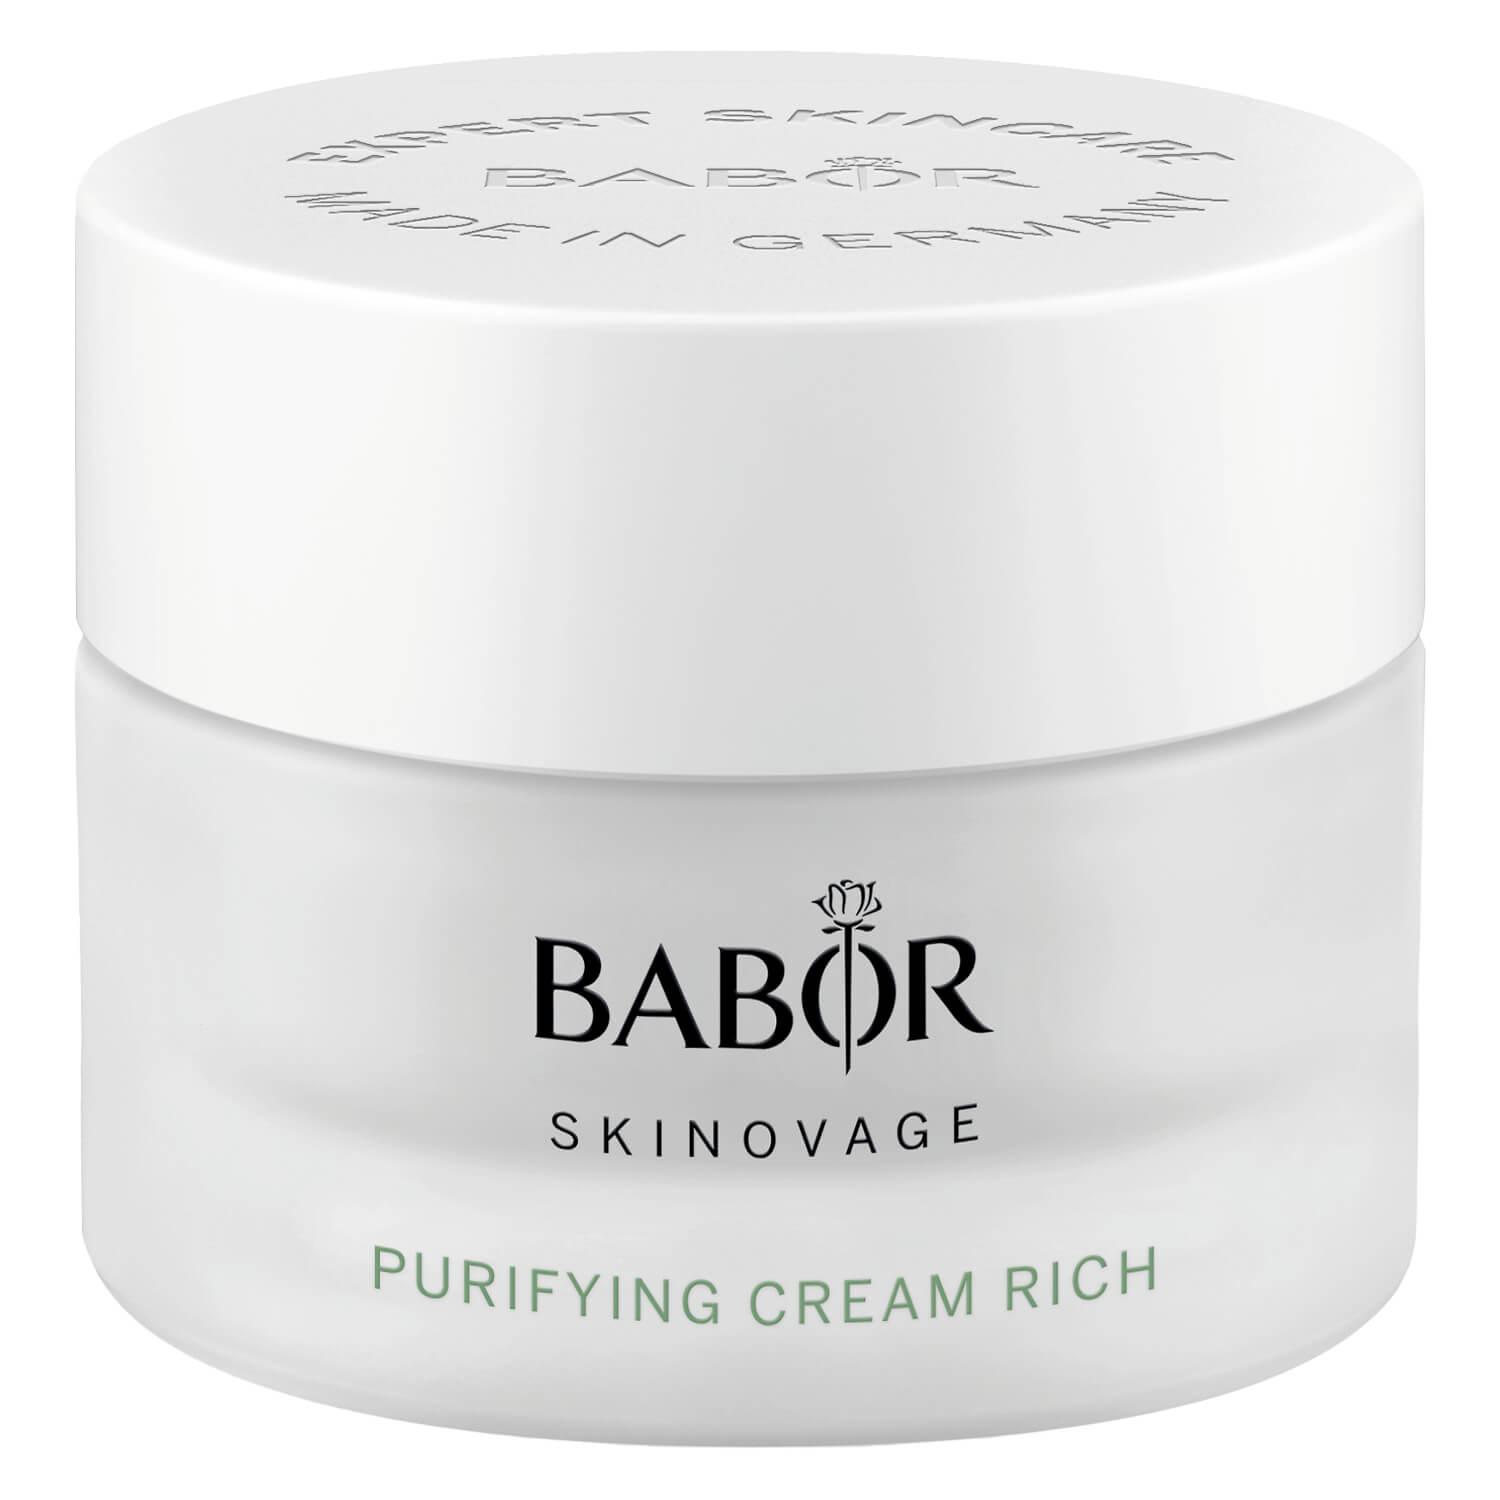 BABOR SKINOVAGE - Purifying Cream Rich Oily Acne-Prone Skin